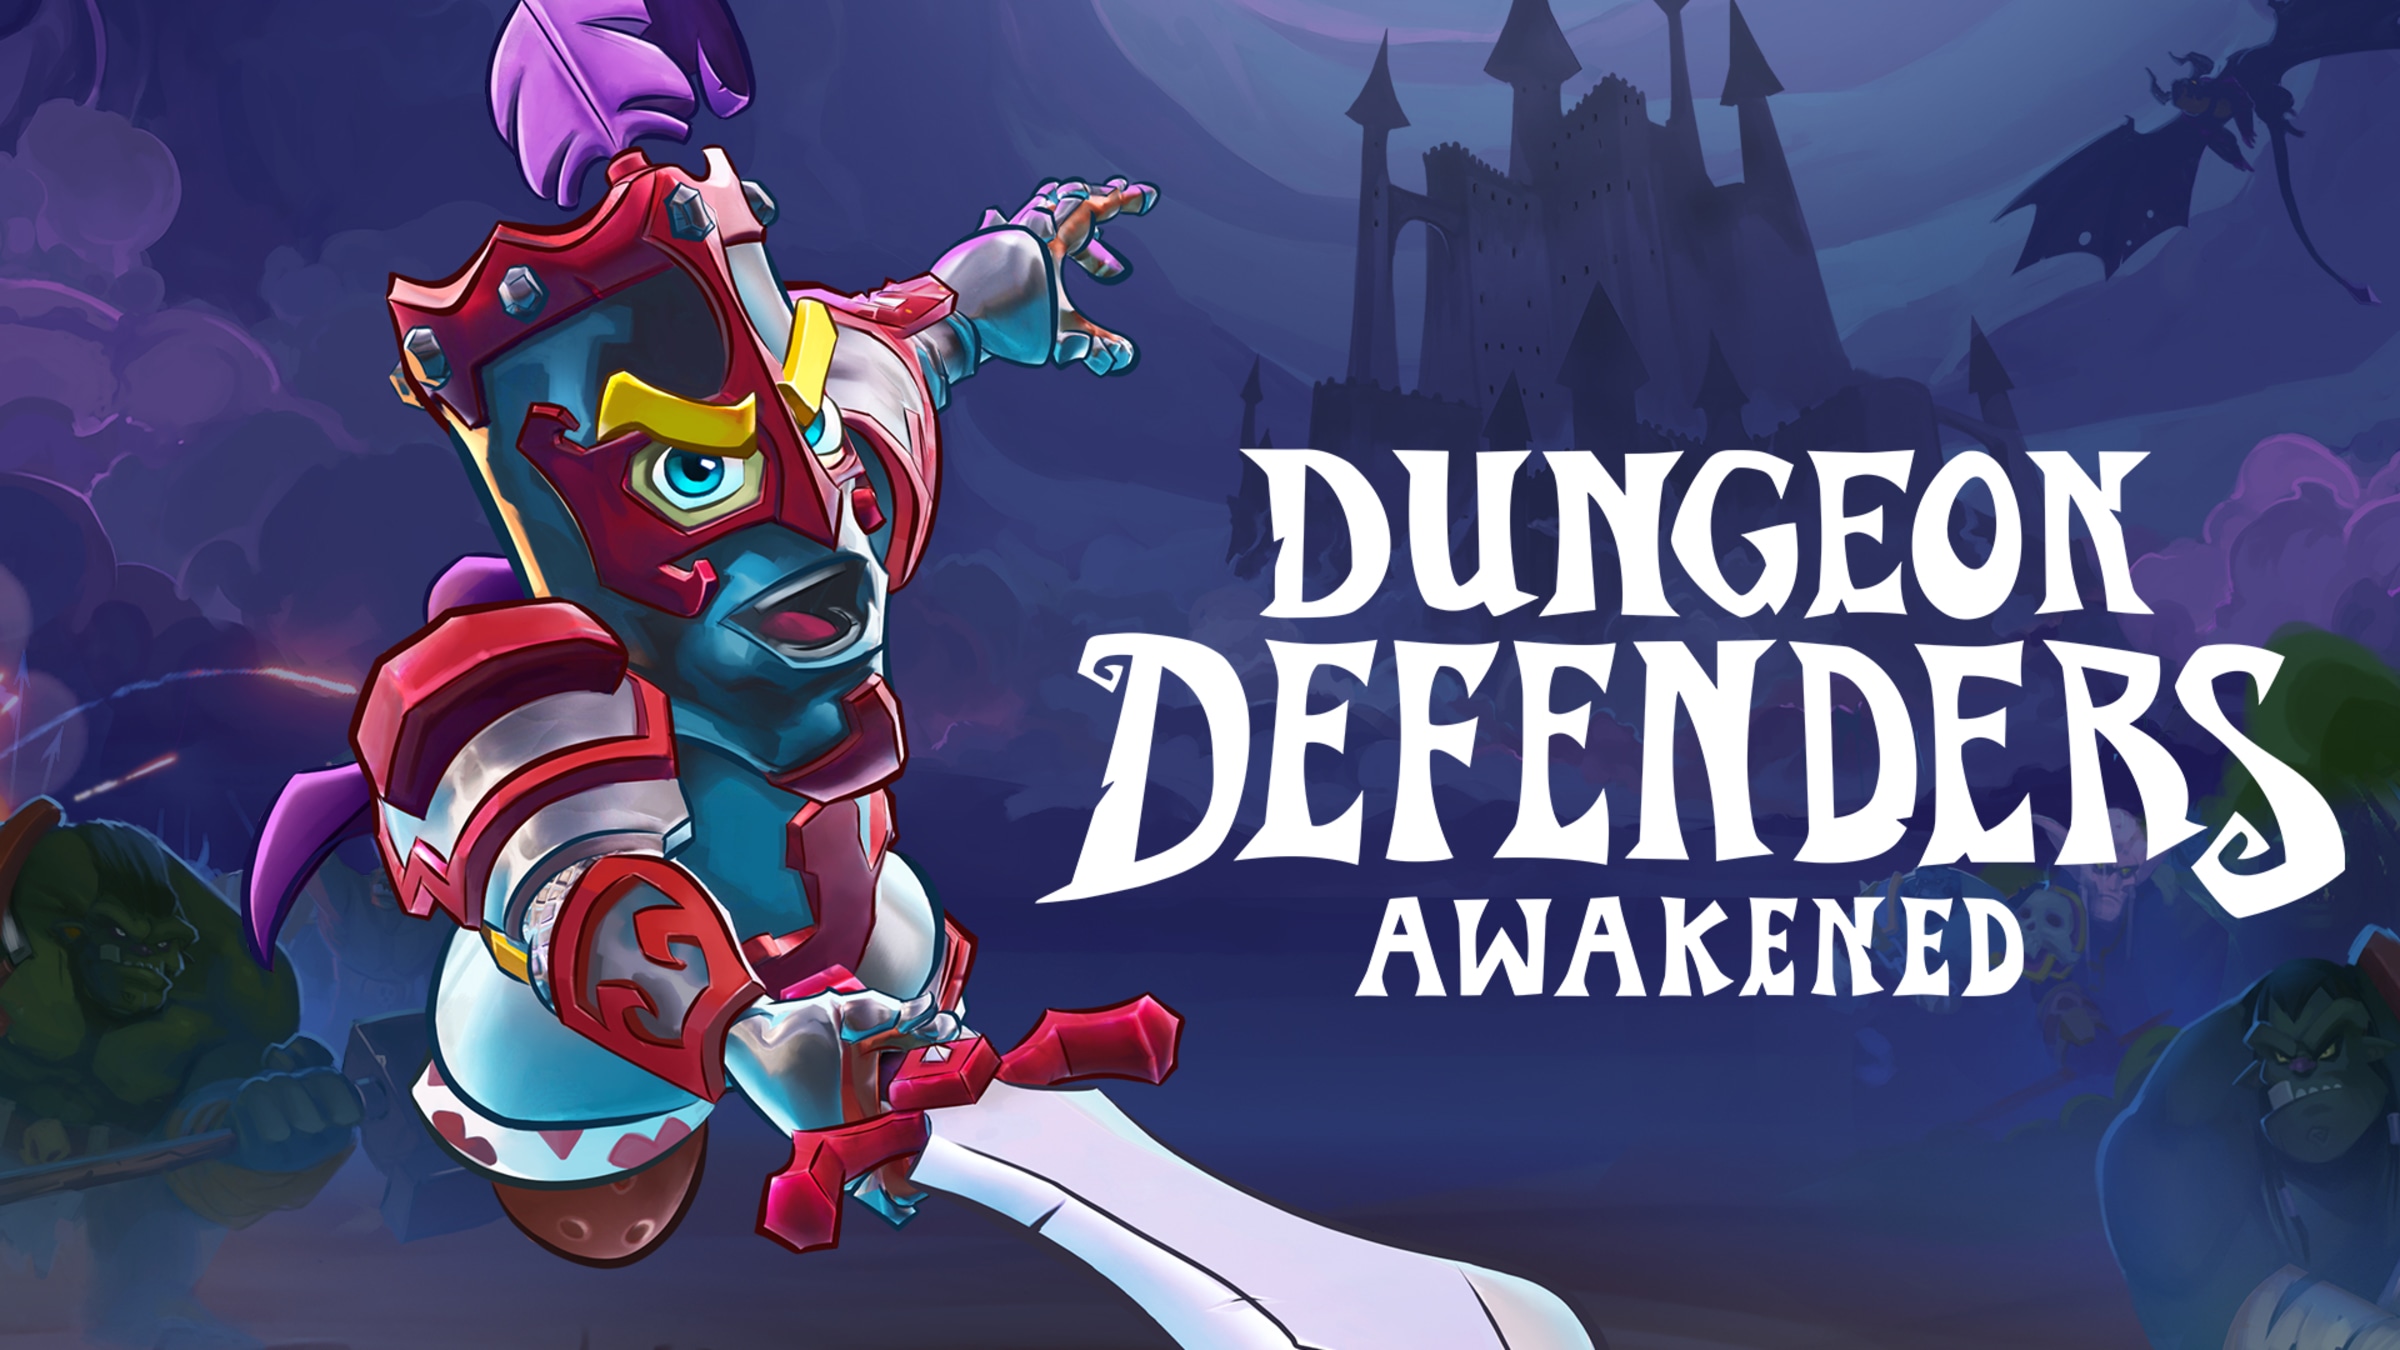 Awakened defender. Dungeon Defenders Awakened. Dungeon Defenders 1. Dungeon Defenders: Awakened Gameplay. Yuletide Dungeon Defenders Awakened.